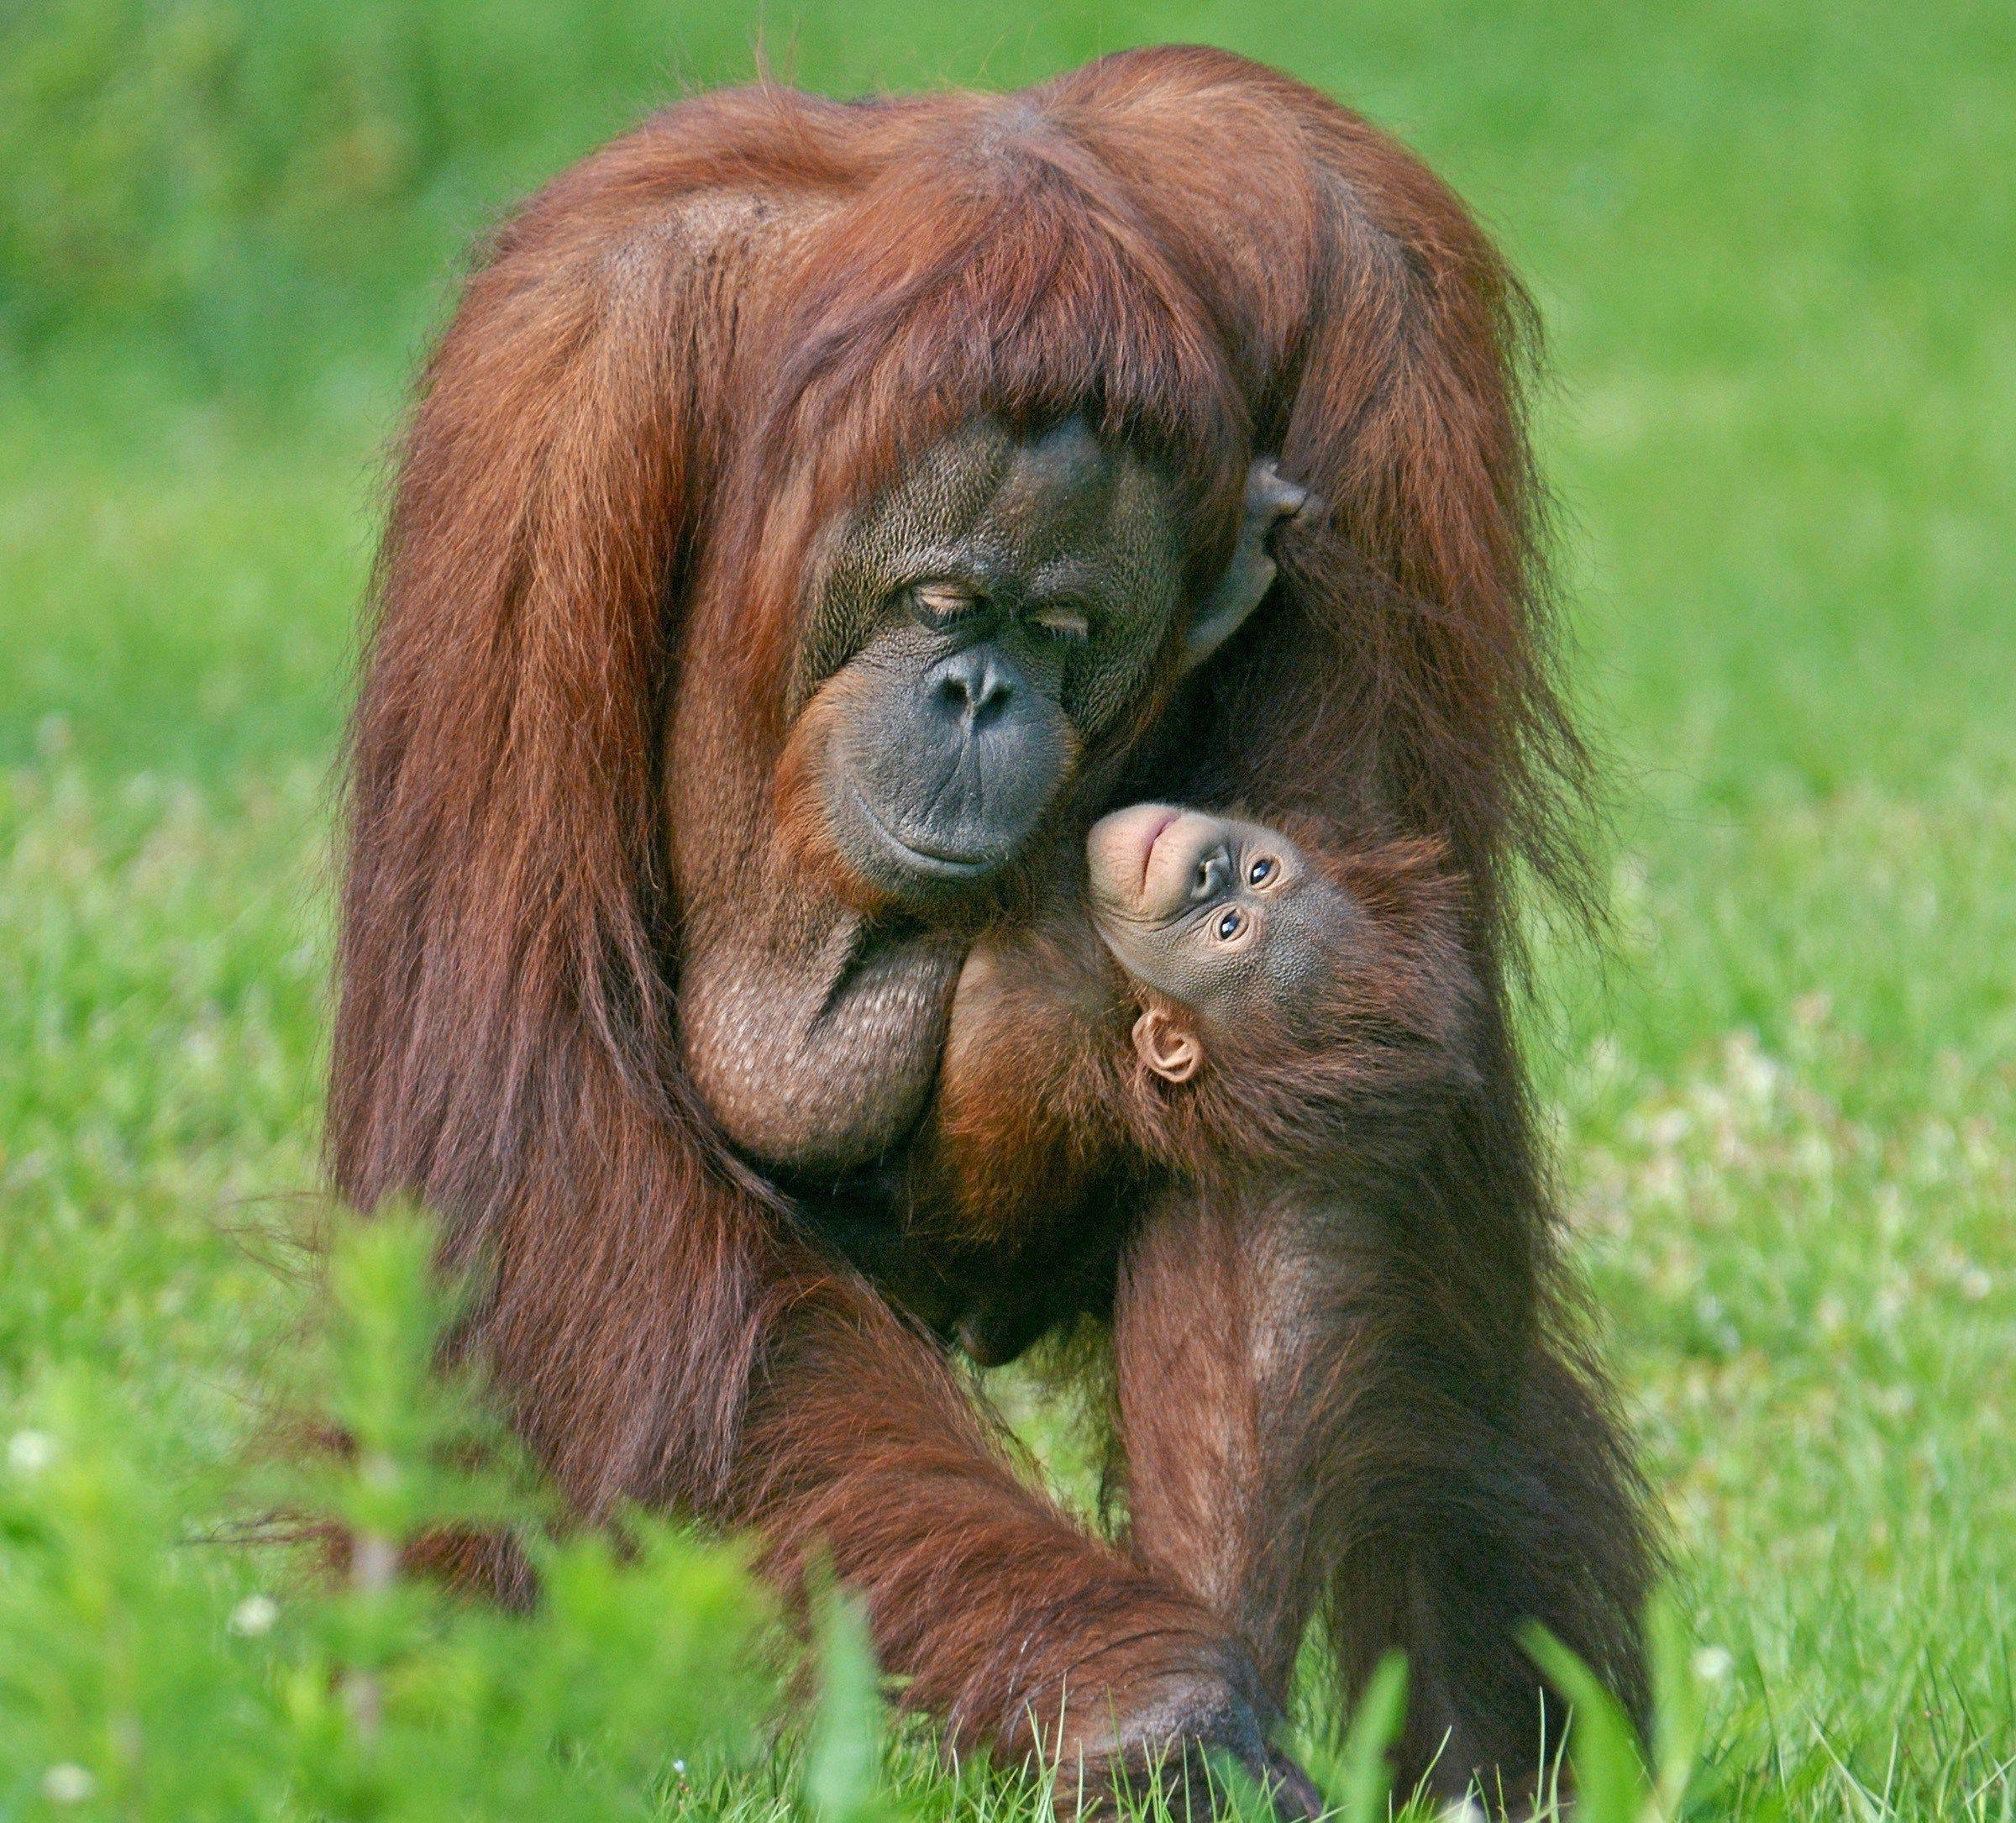 Satu and his mom, Sara, bonding (Photo courtesy of Gulf Breeze Zoo).